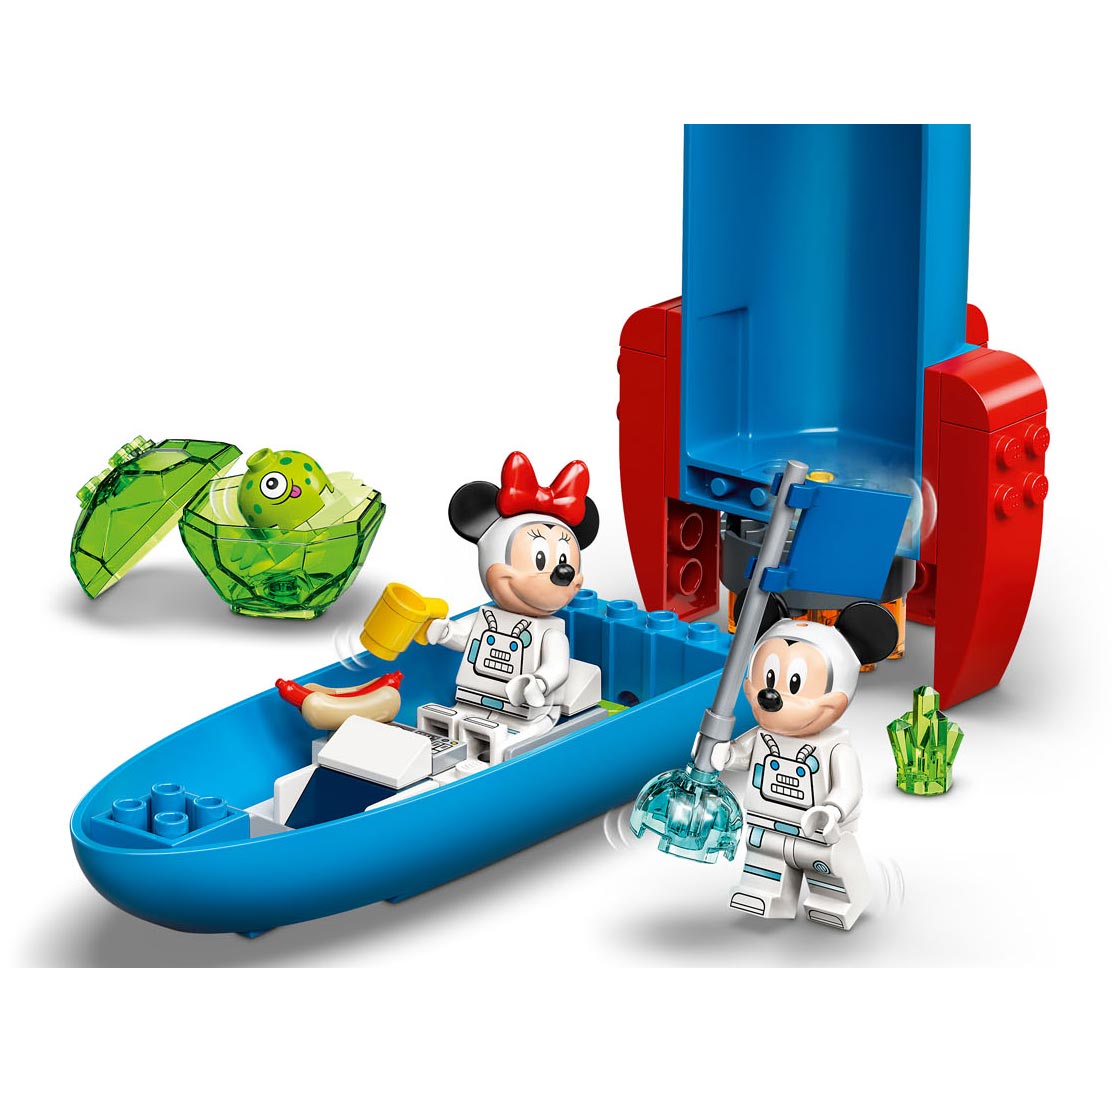 LEGO Disney 10774 Mickey Mouse en Minnie Mouse Ruimteraket